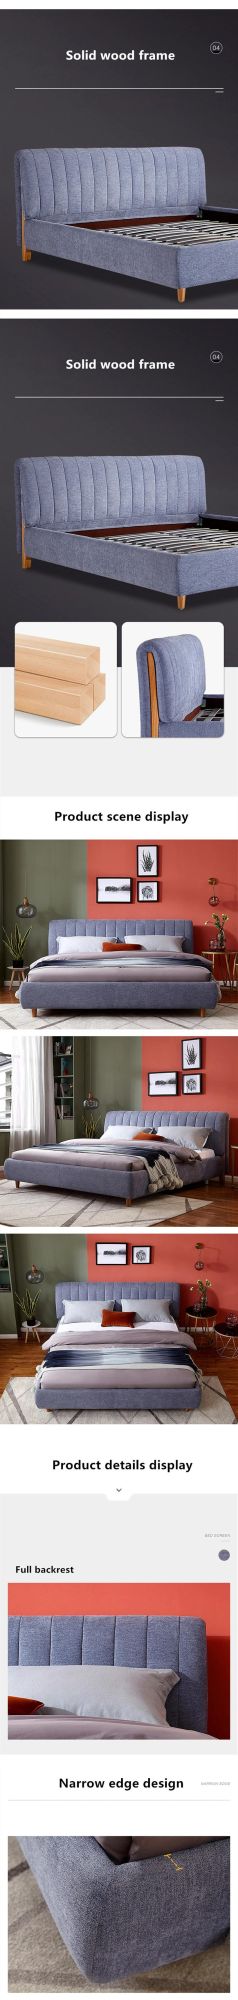 Modern Style Master Bedroom Large Soft #Bed 0178-3